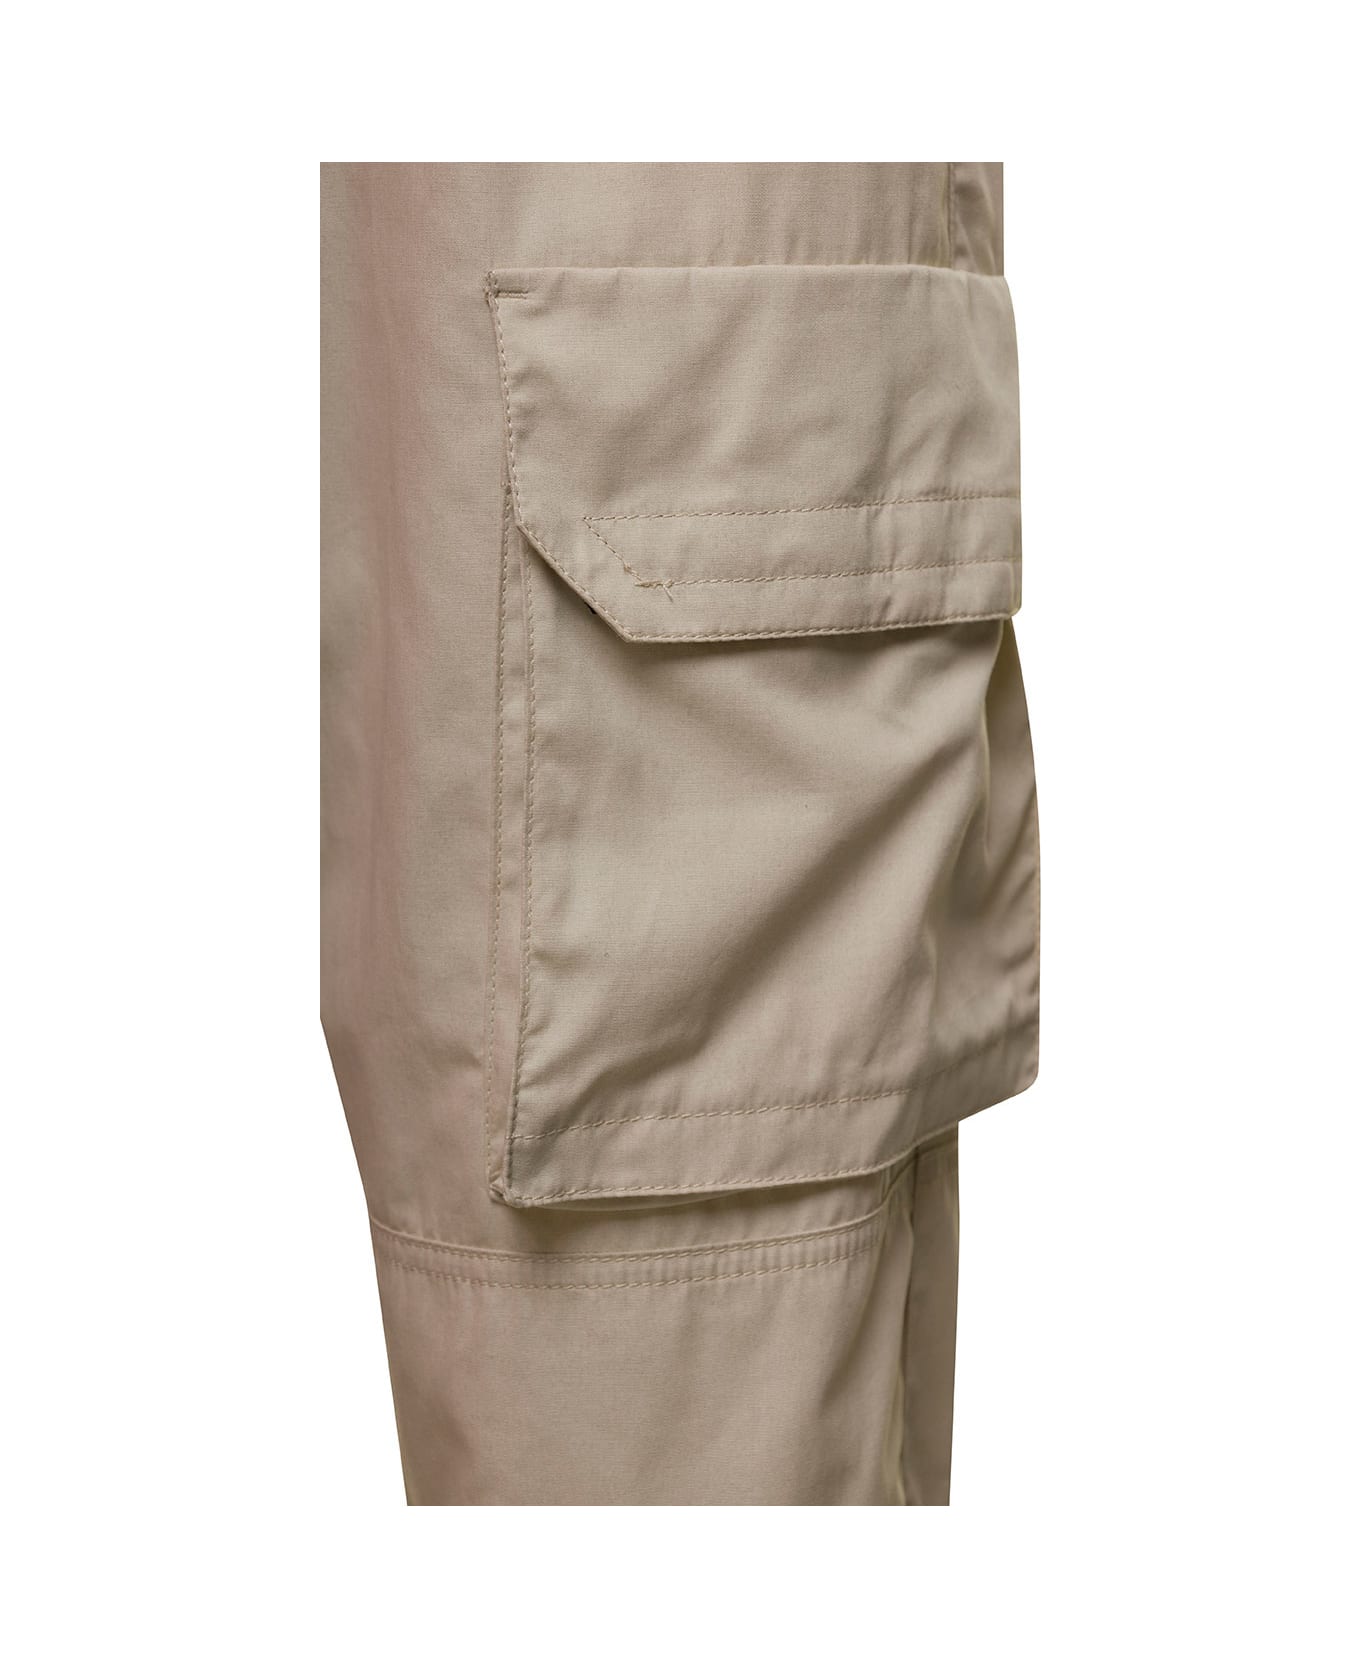 44 Label Group 'propagator' Beige Cargo Pants With Elasticated Waist In Cotton Man - Beige